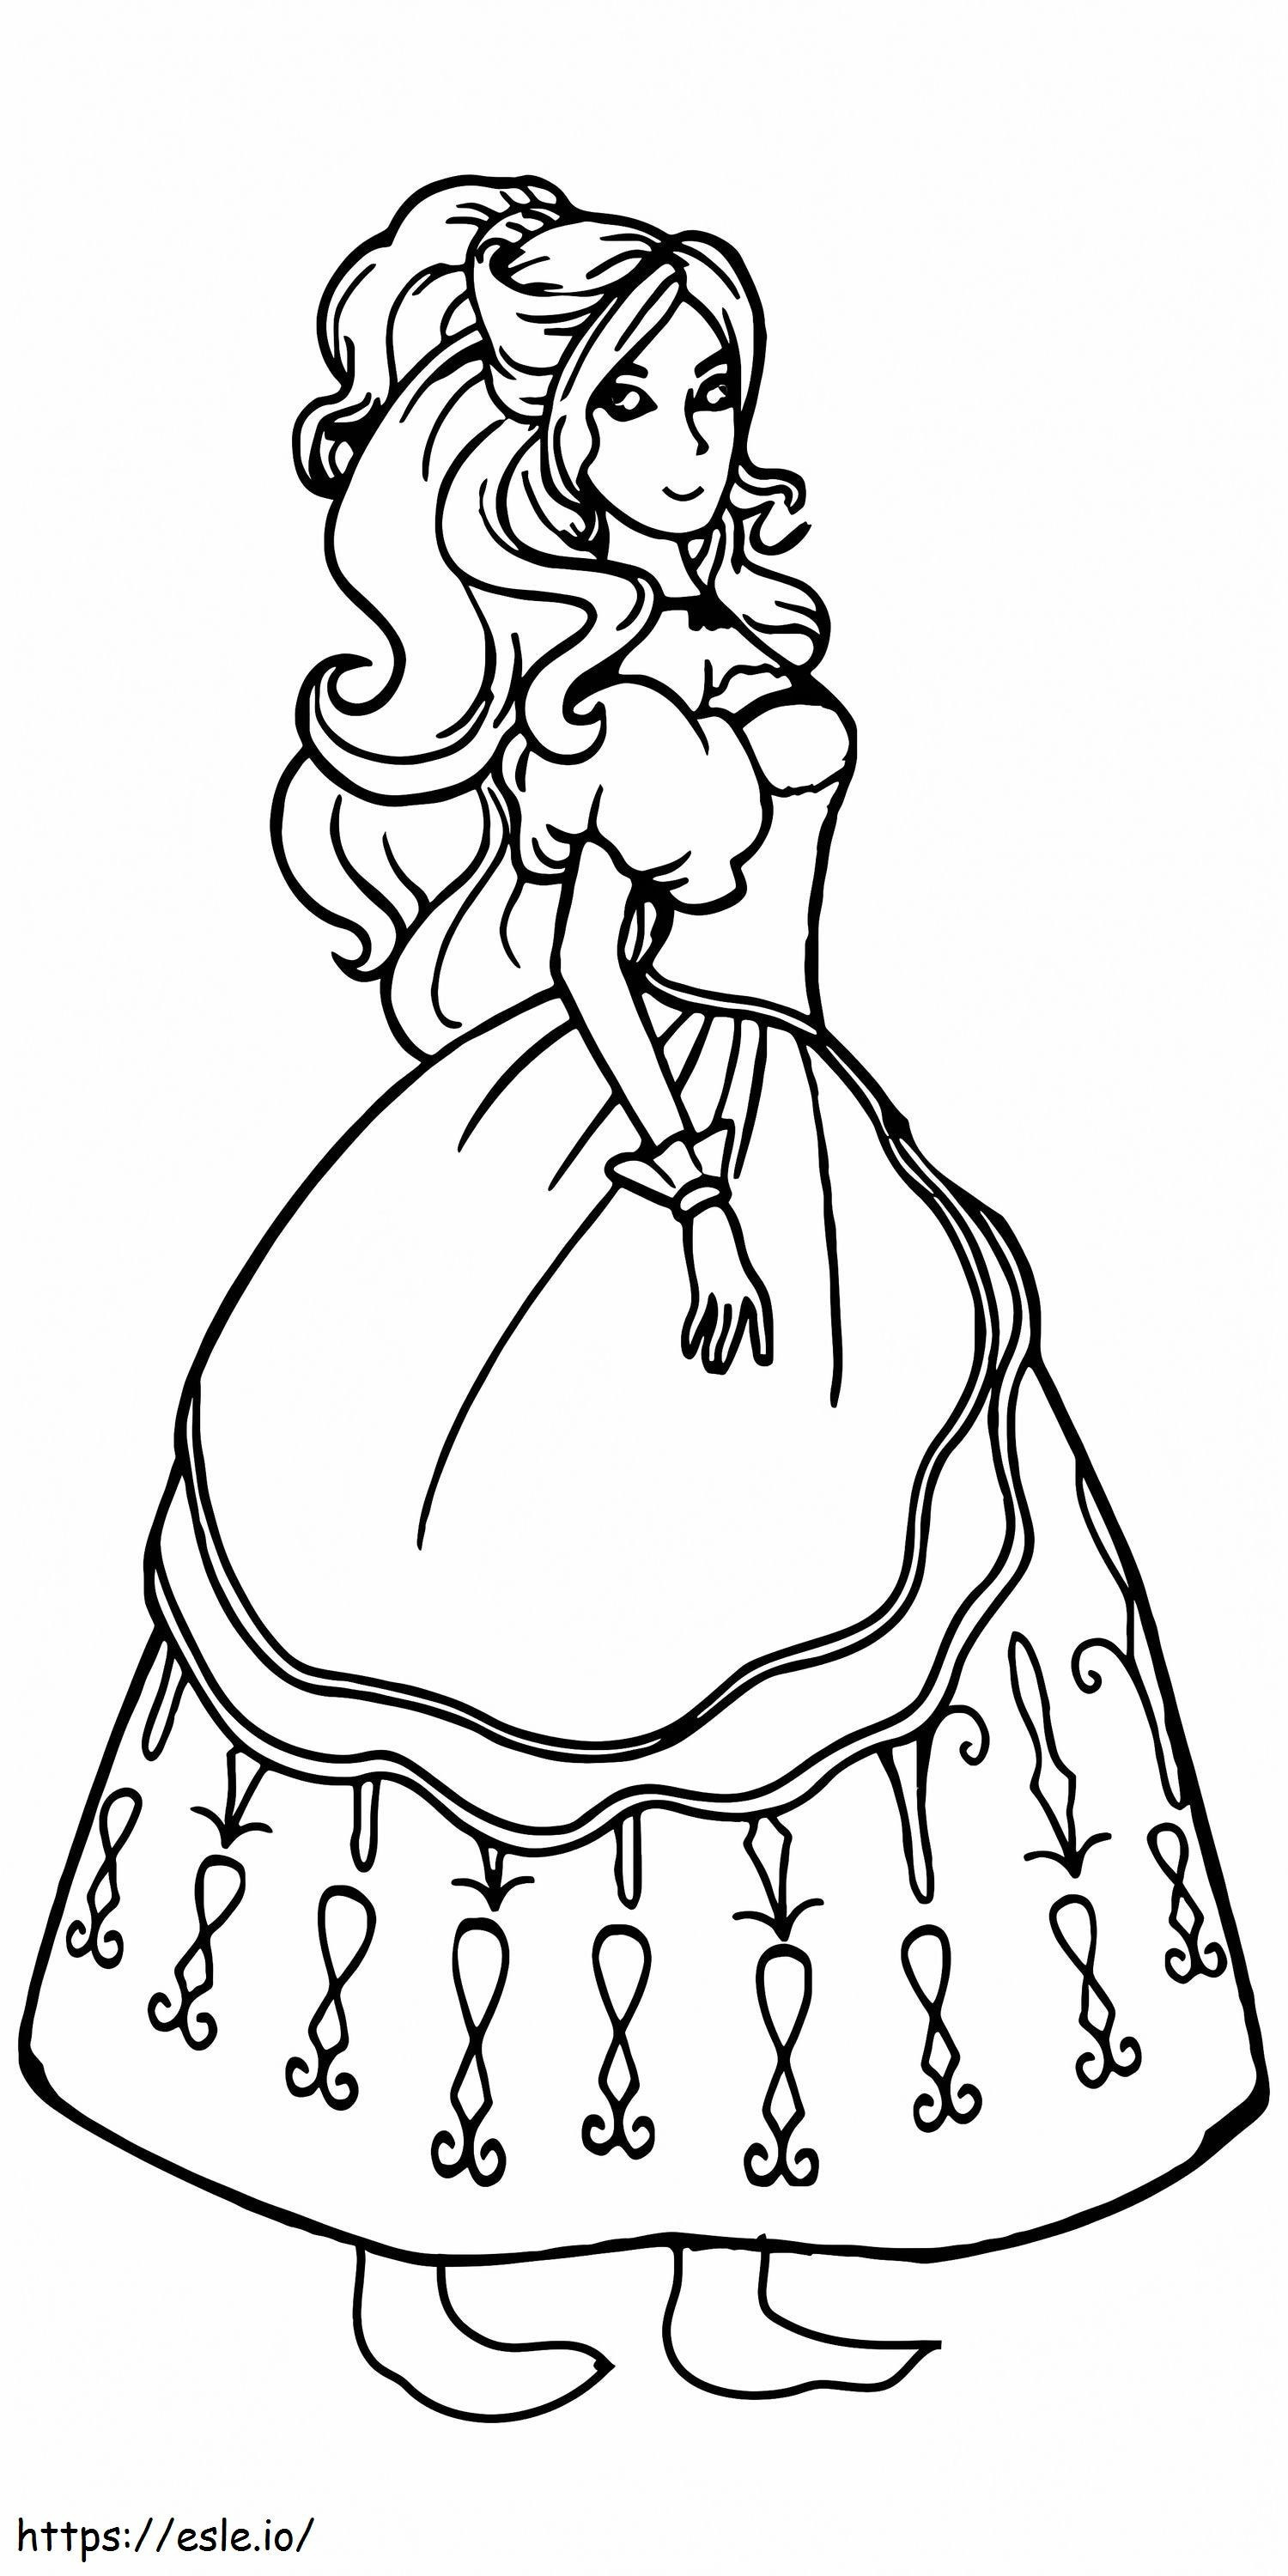 Princess And The Pea Printable 3 coloring page